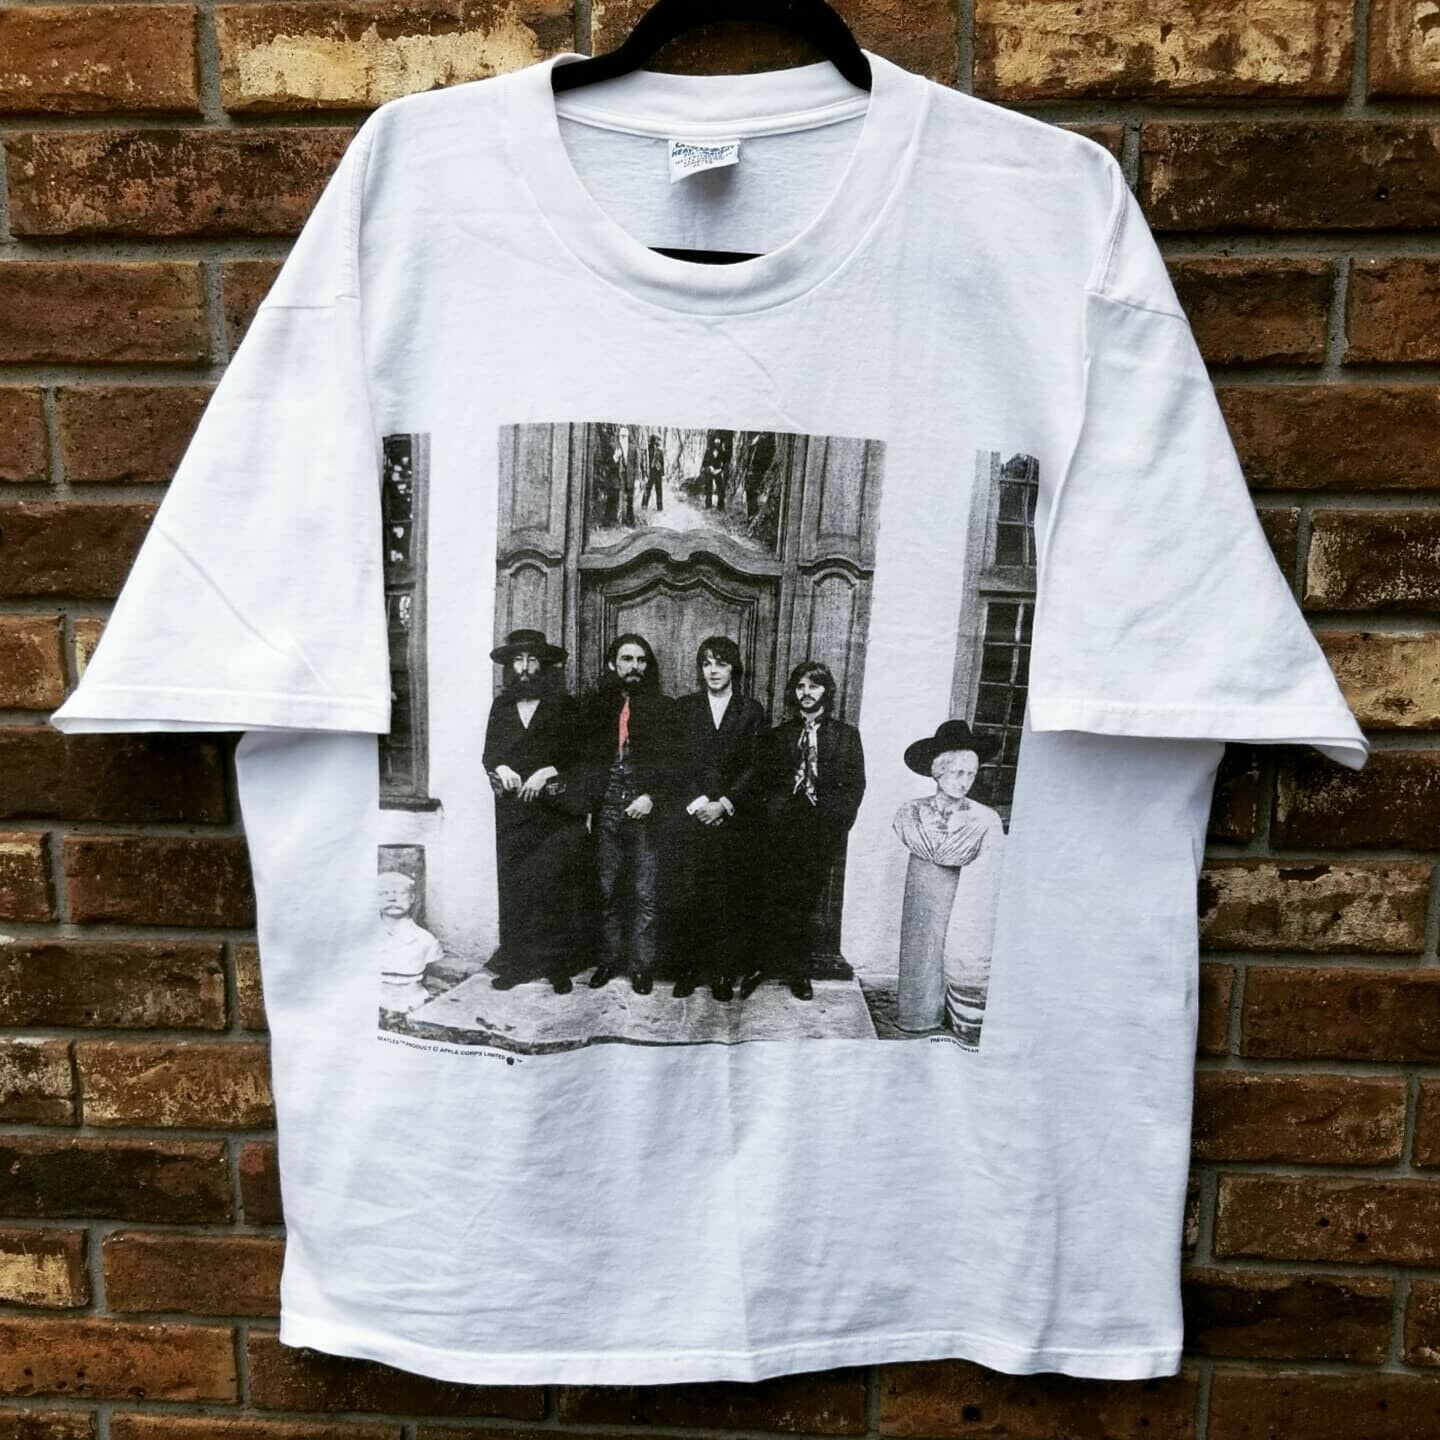 Original Vintage 1990s The Beatles Hey Jude Album Promo Band Tee T Shirt XL